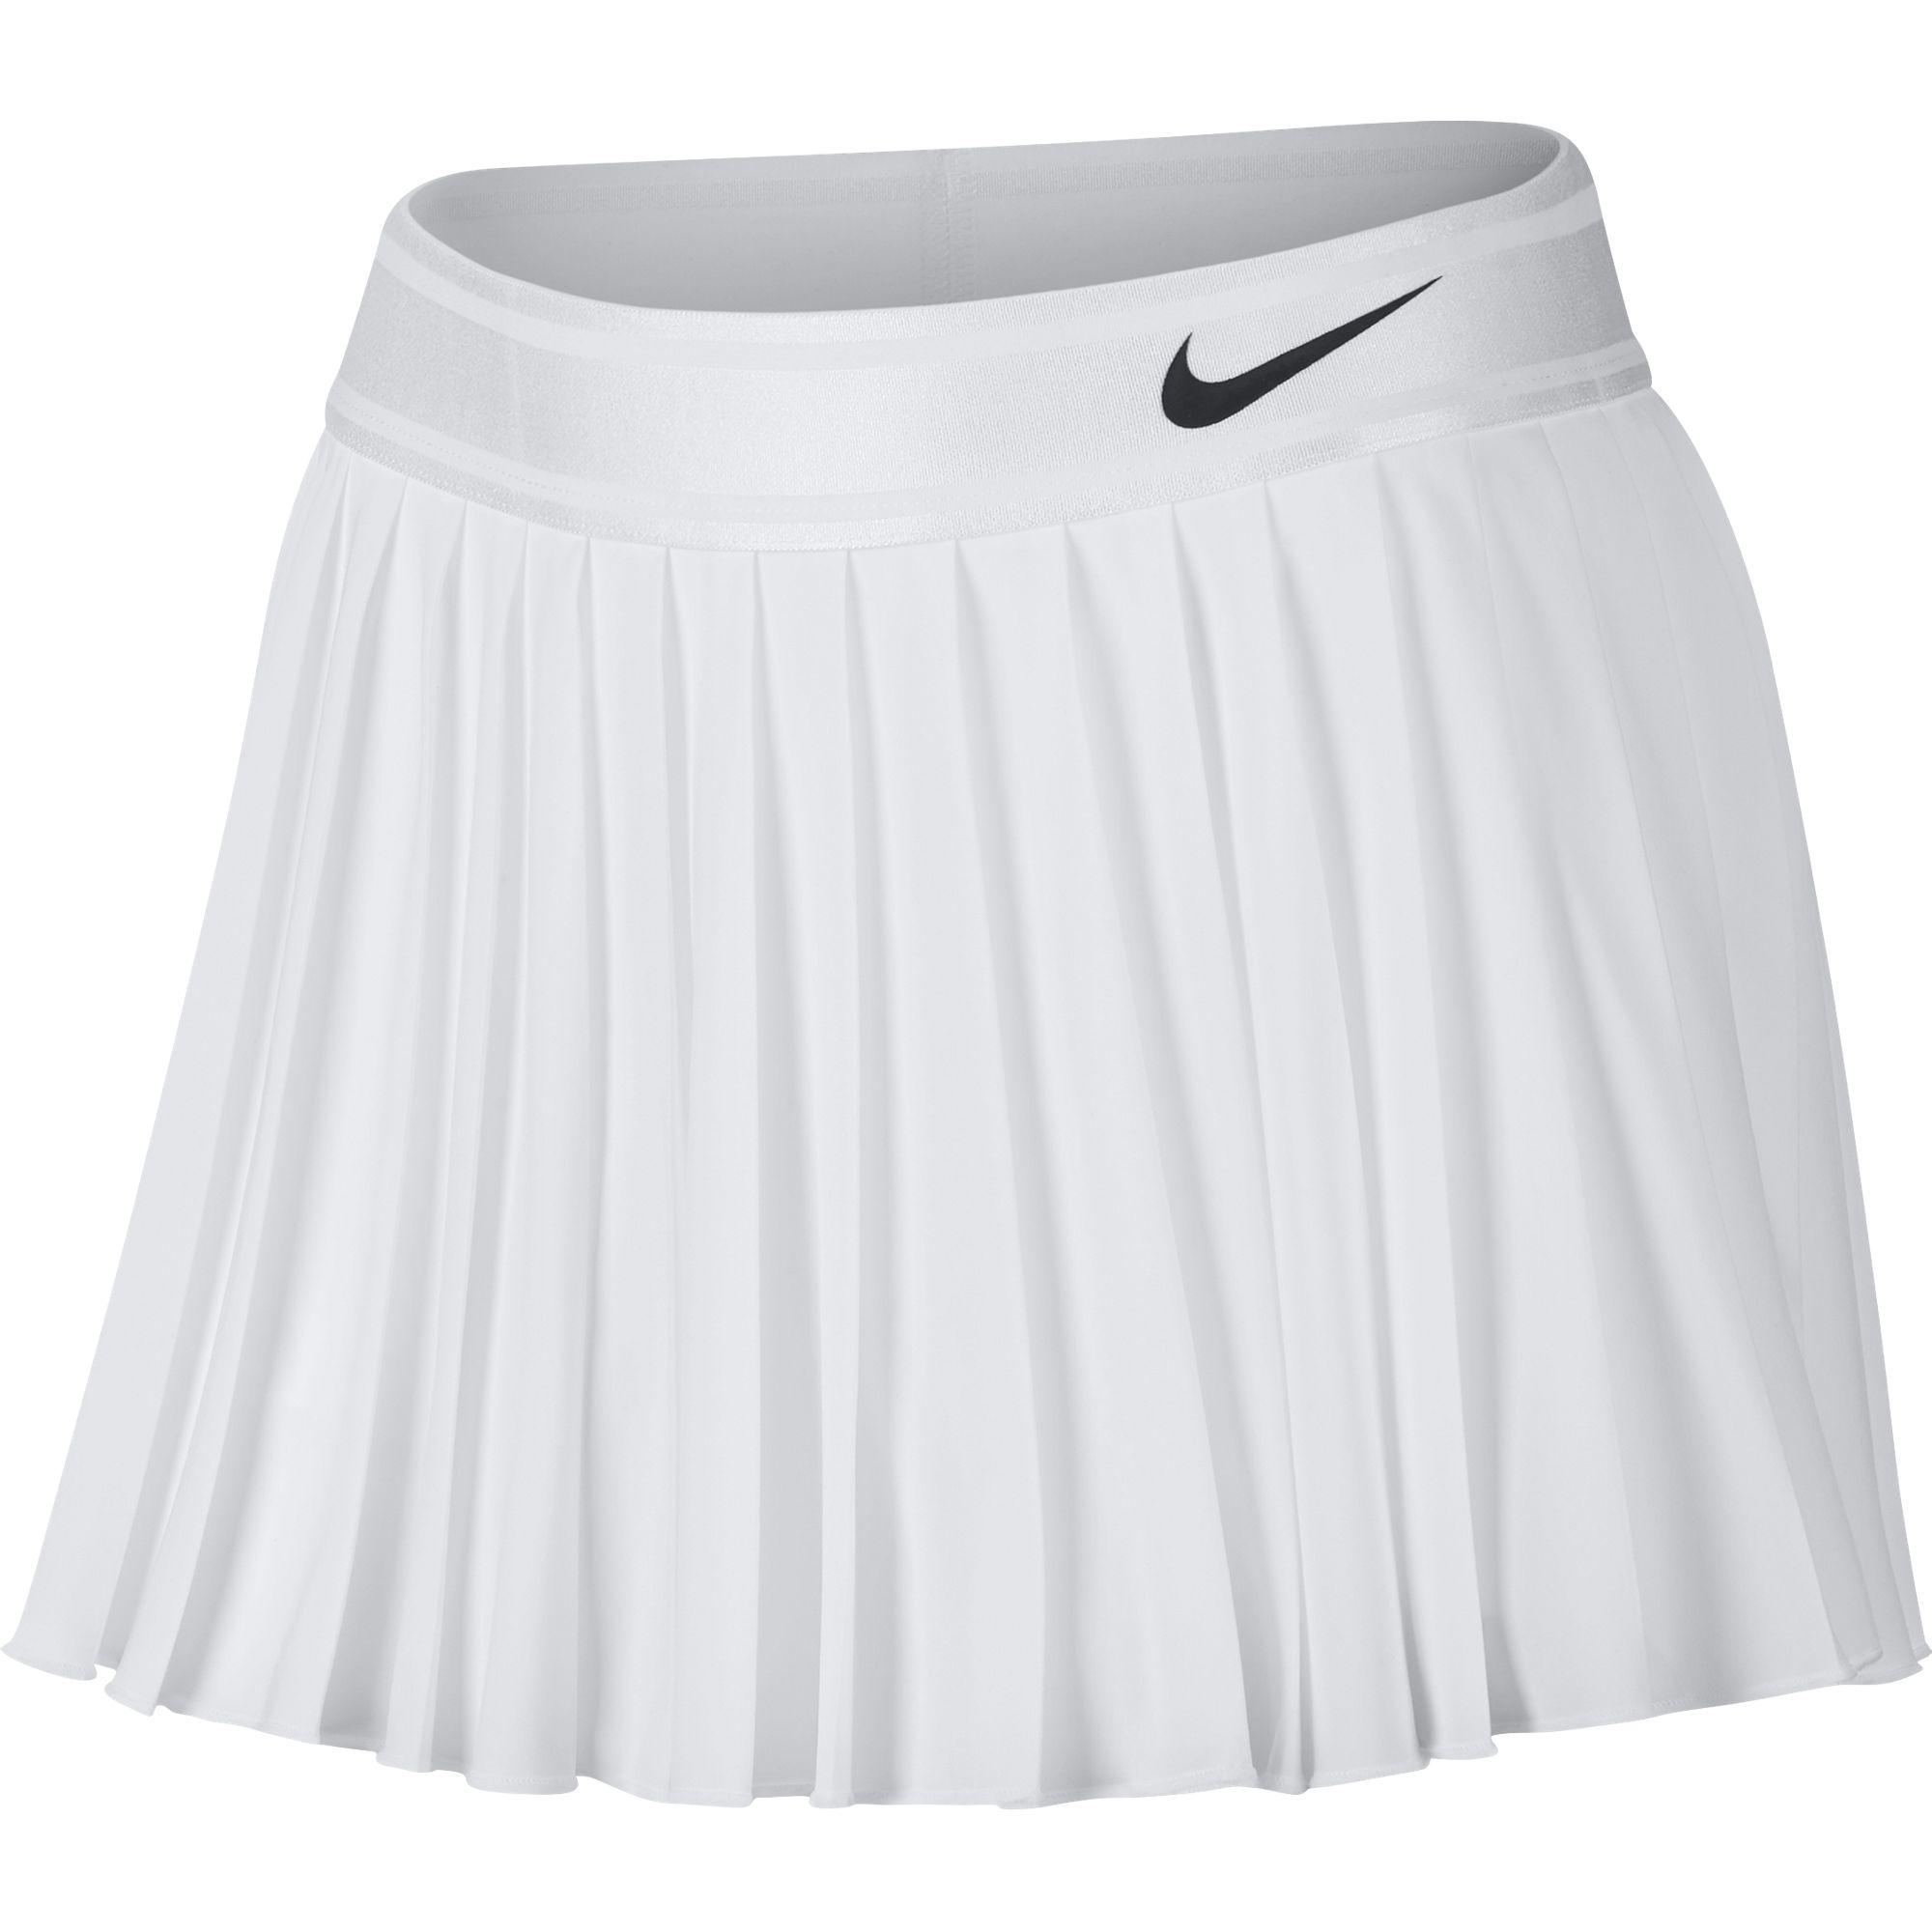 nike tennis skirt white victory